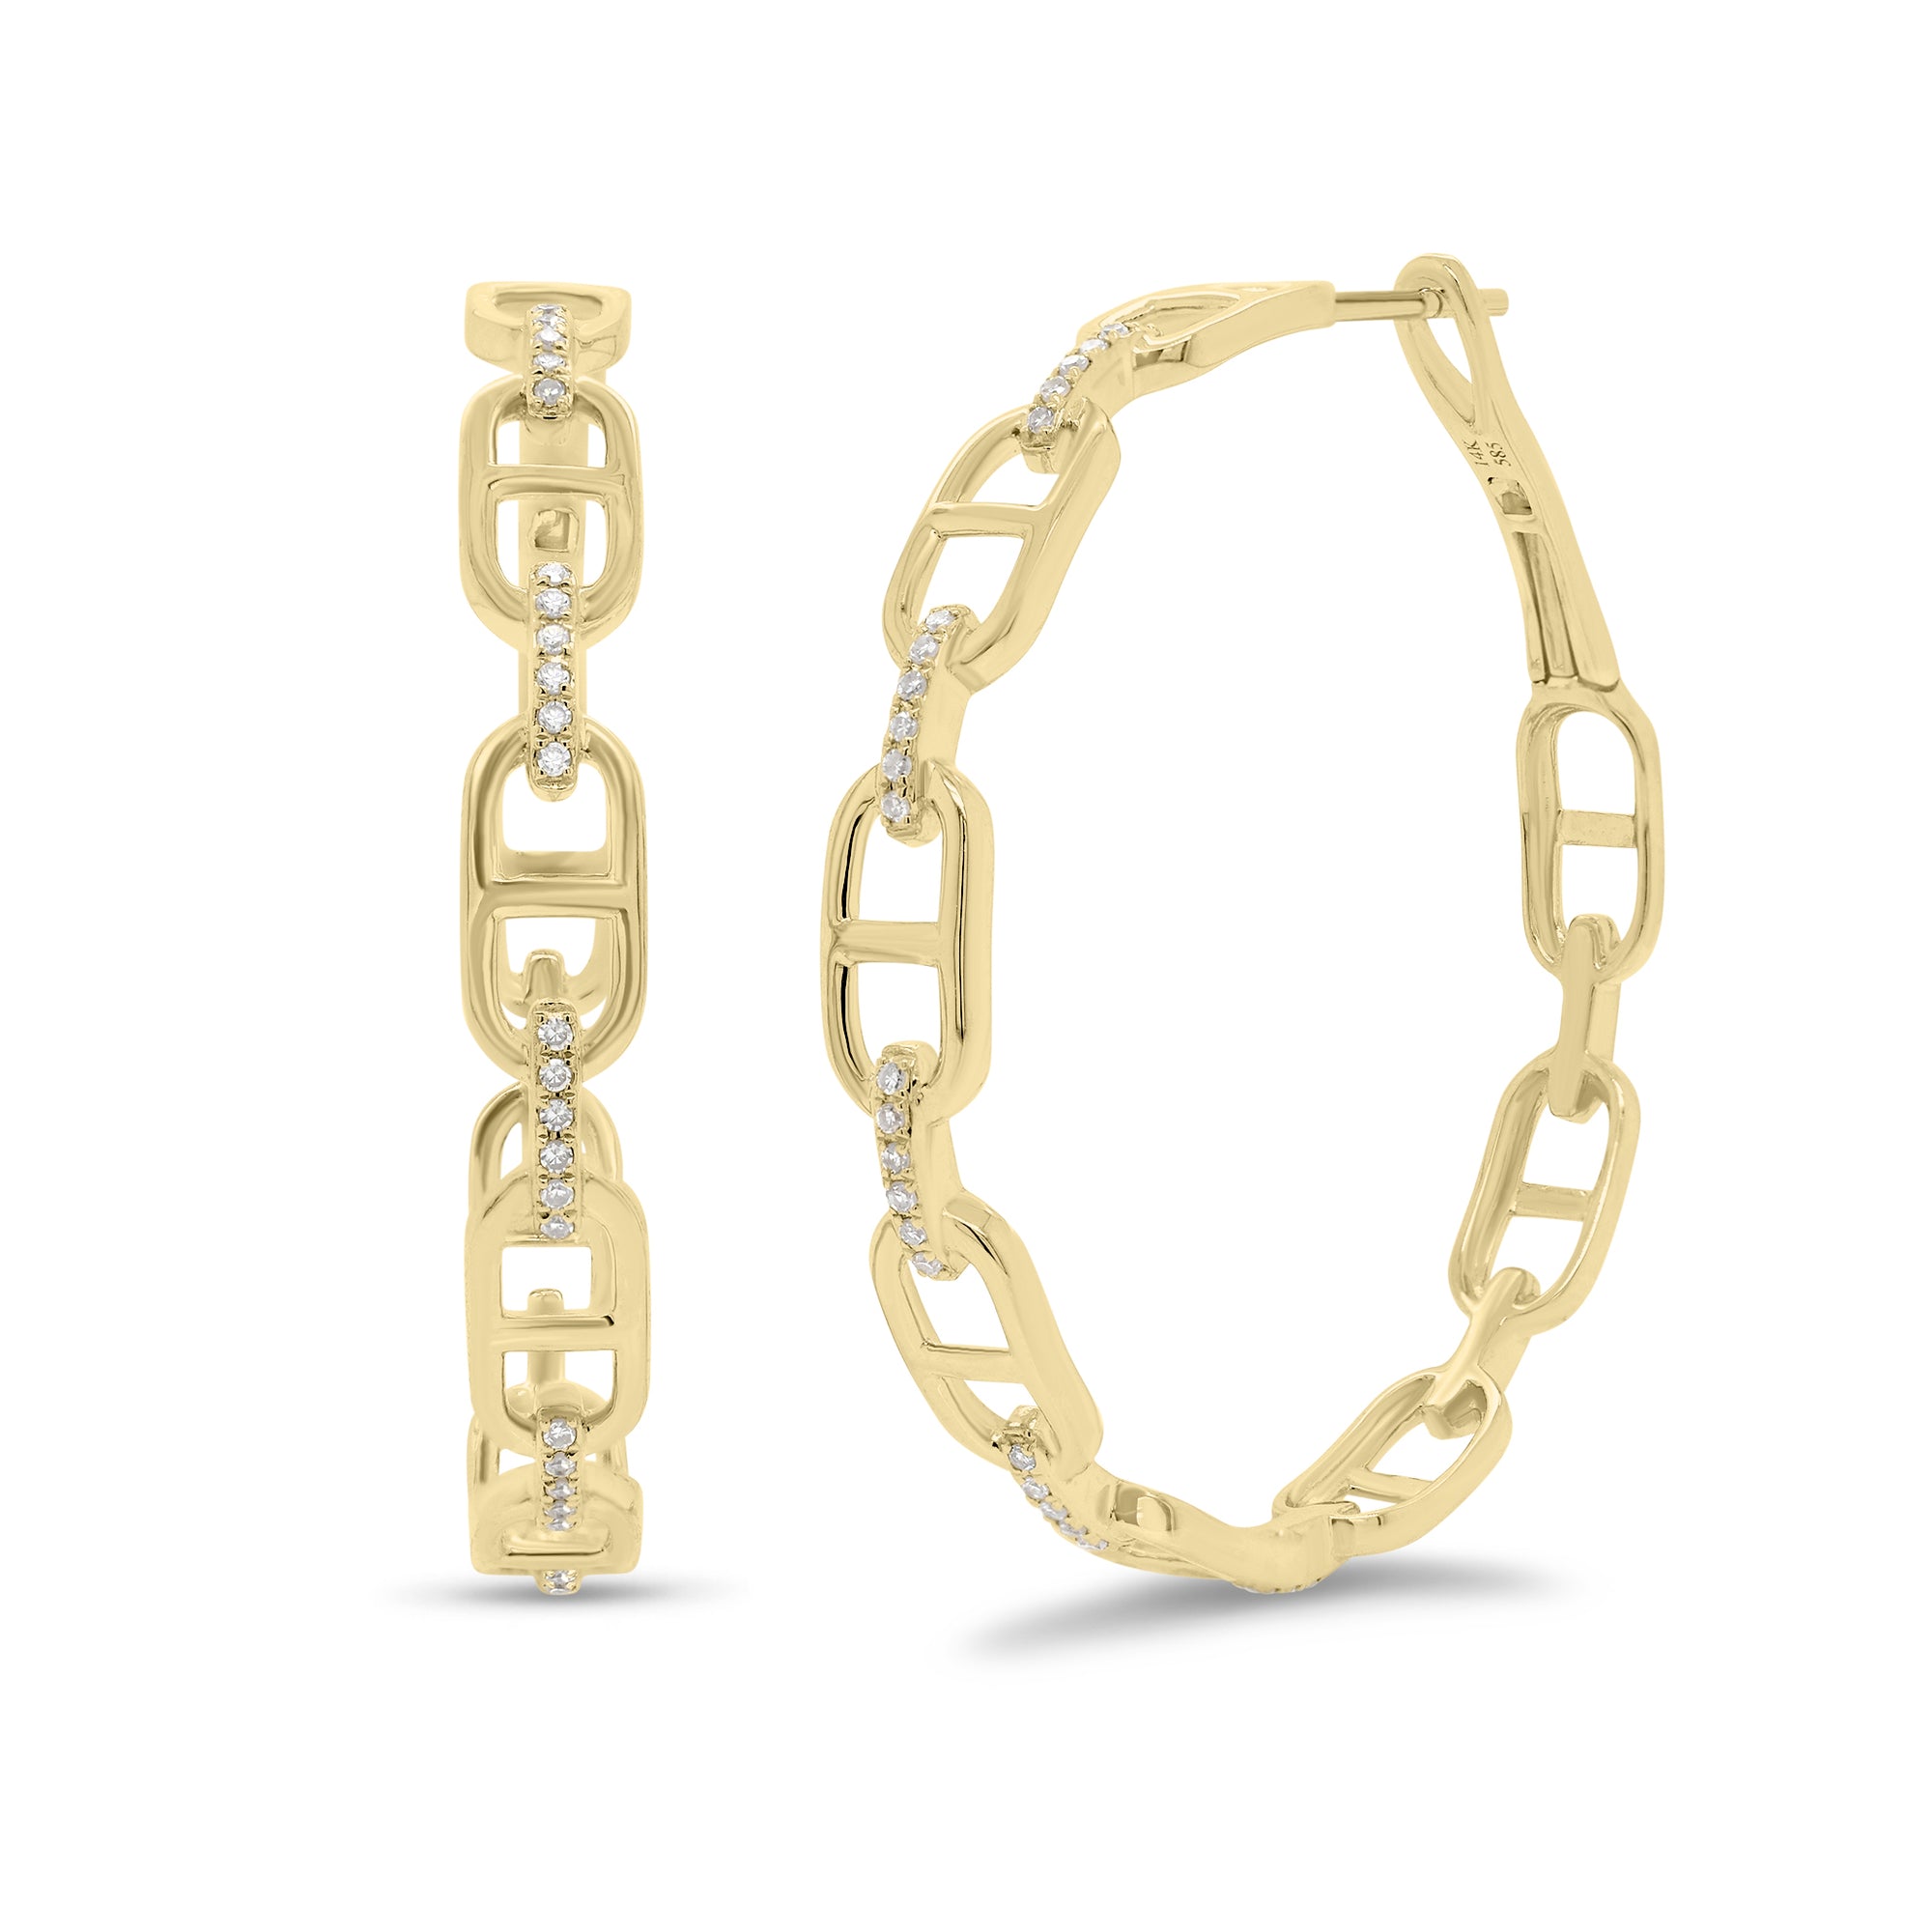 Diamond & gold large tri-link hoop earrings - 14K gold weighing 7.27 grams  - 84 round diamonds totaling 0.26 carats